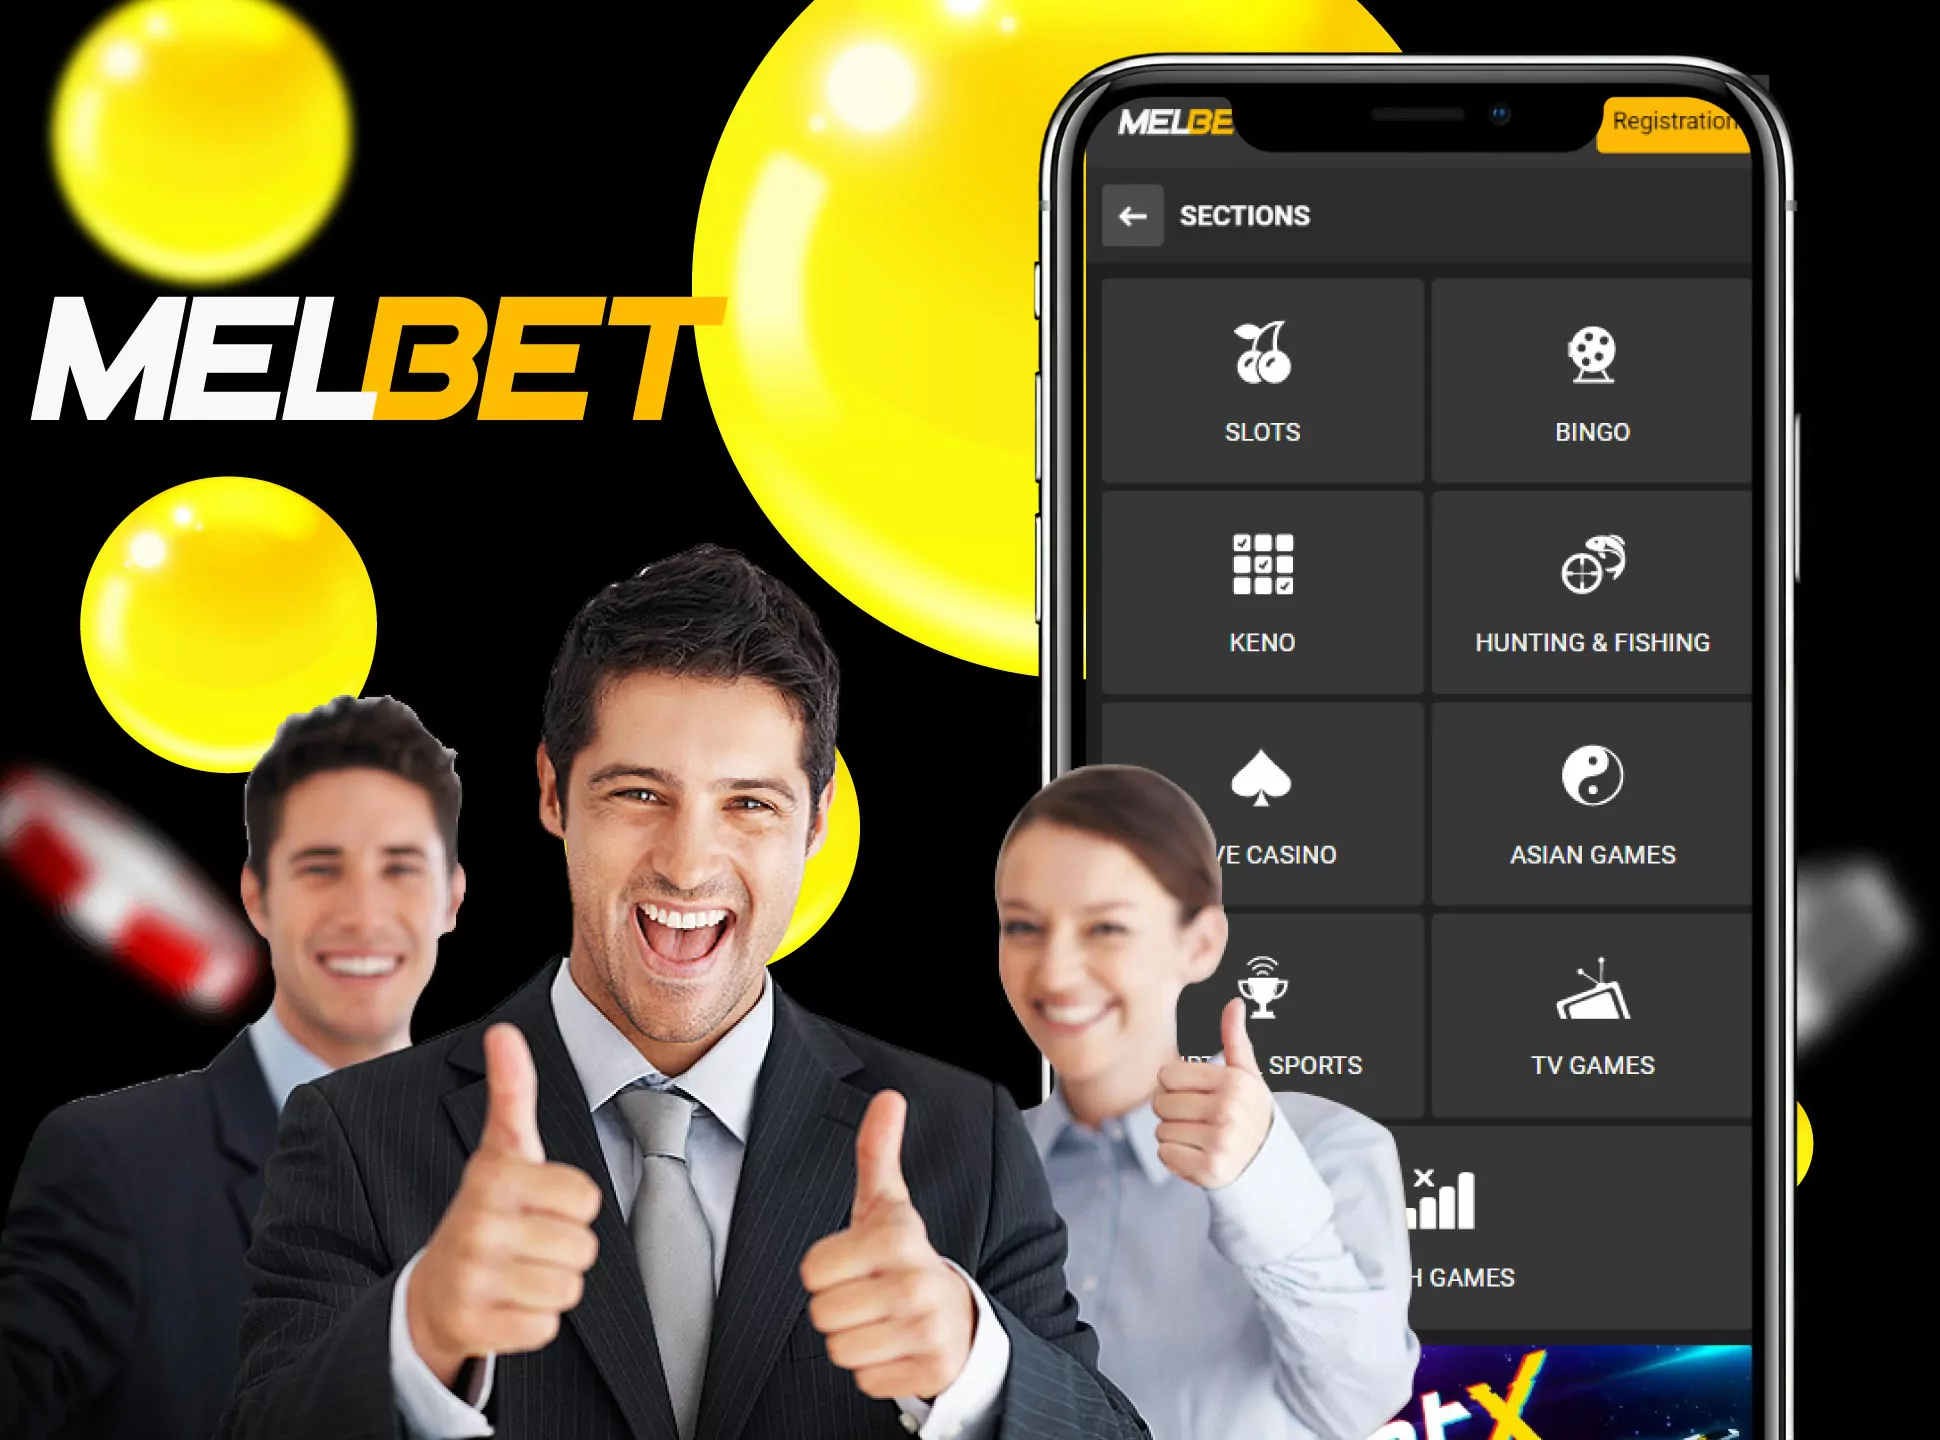 Play casino games using Melbet casino app.